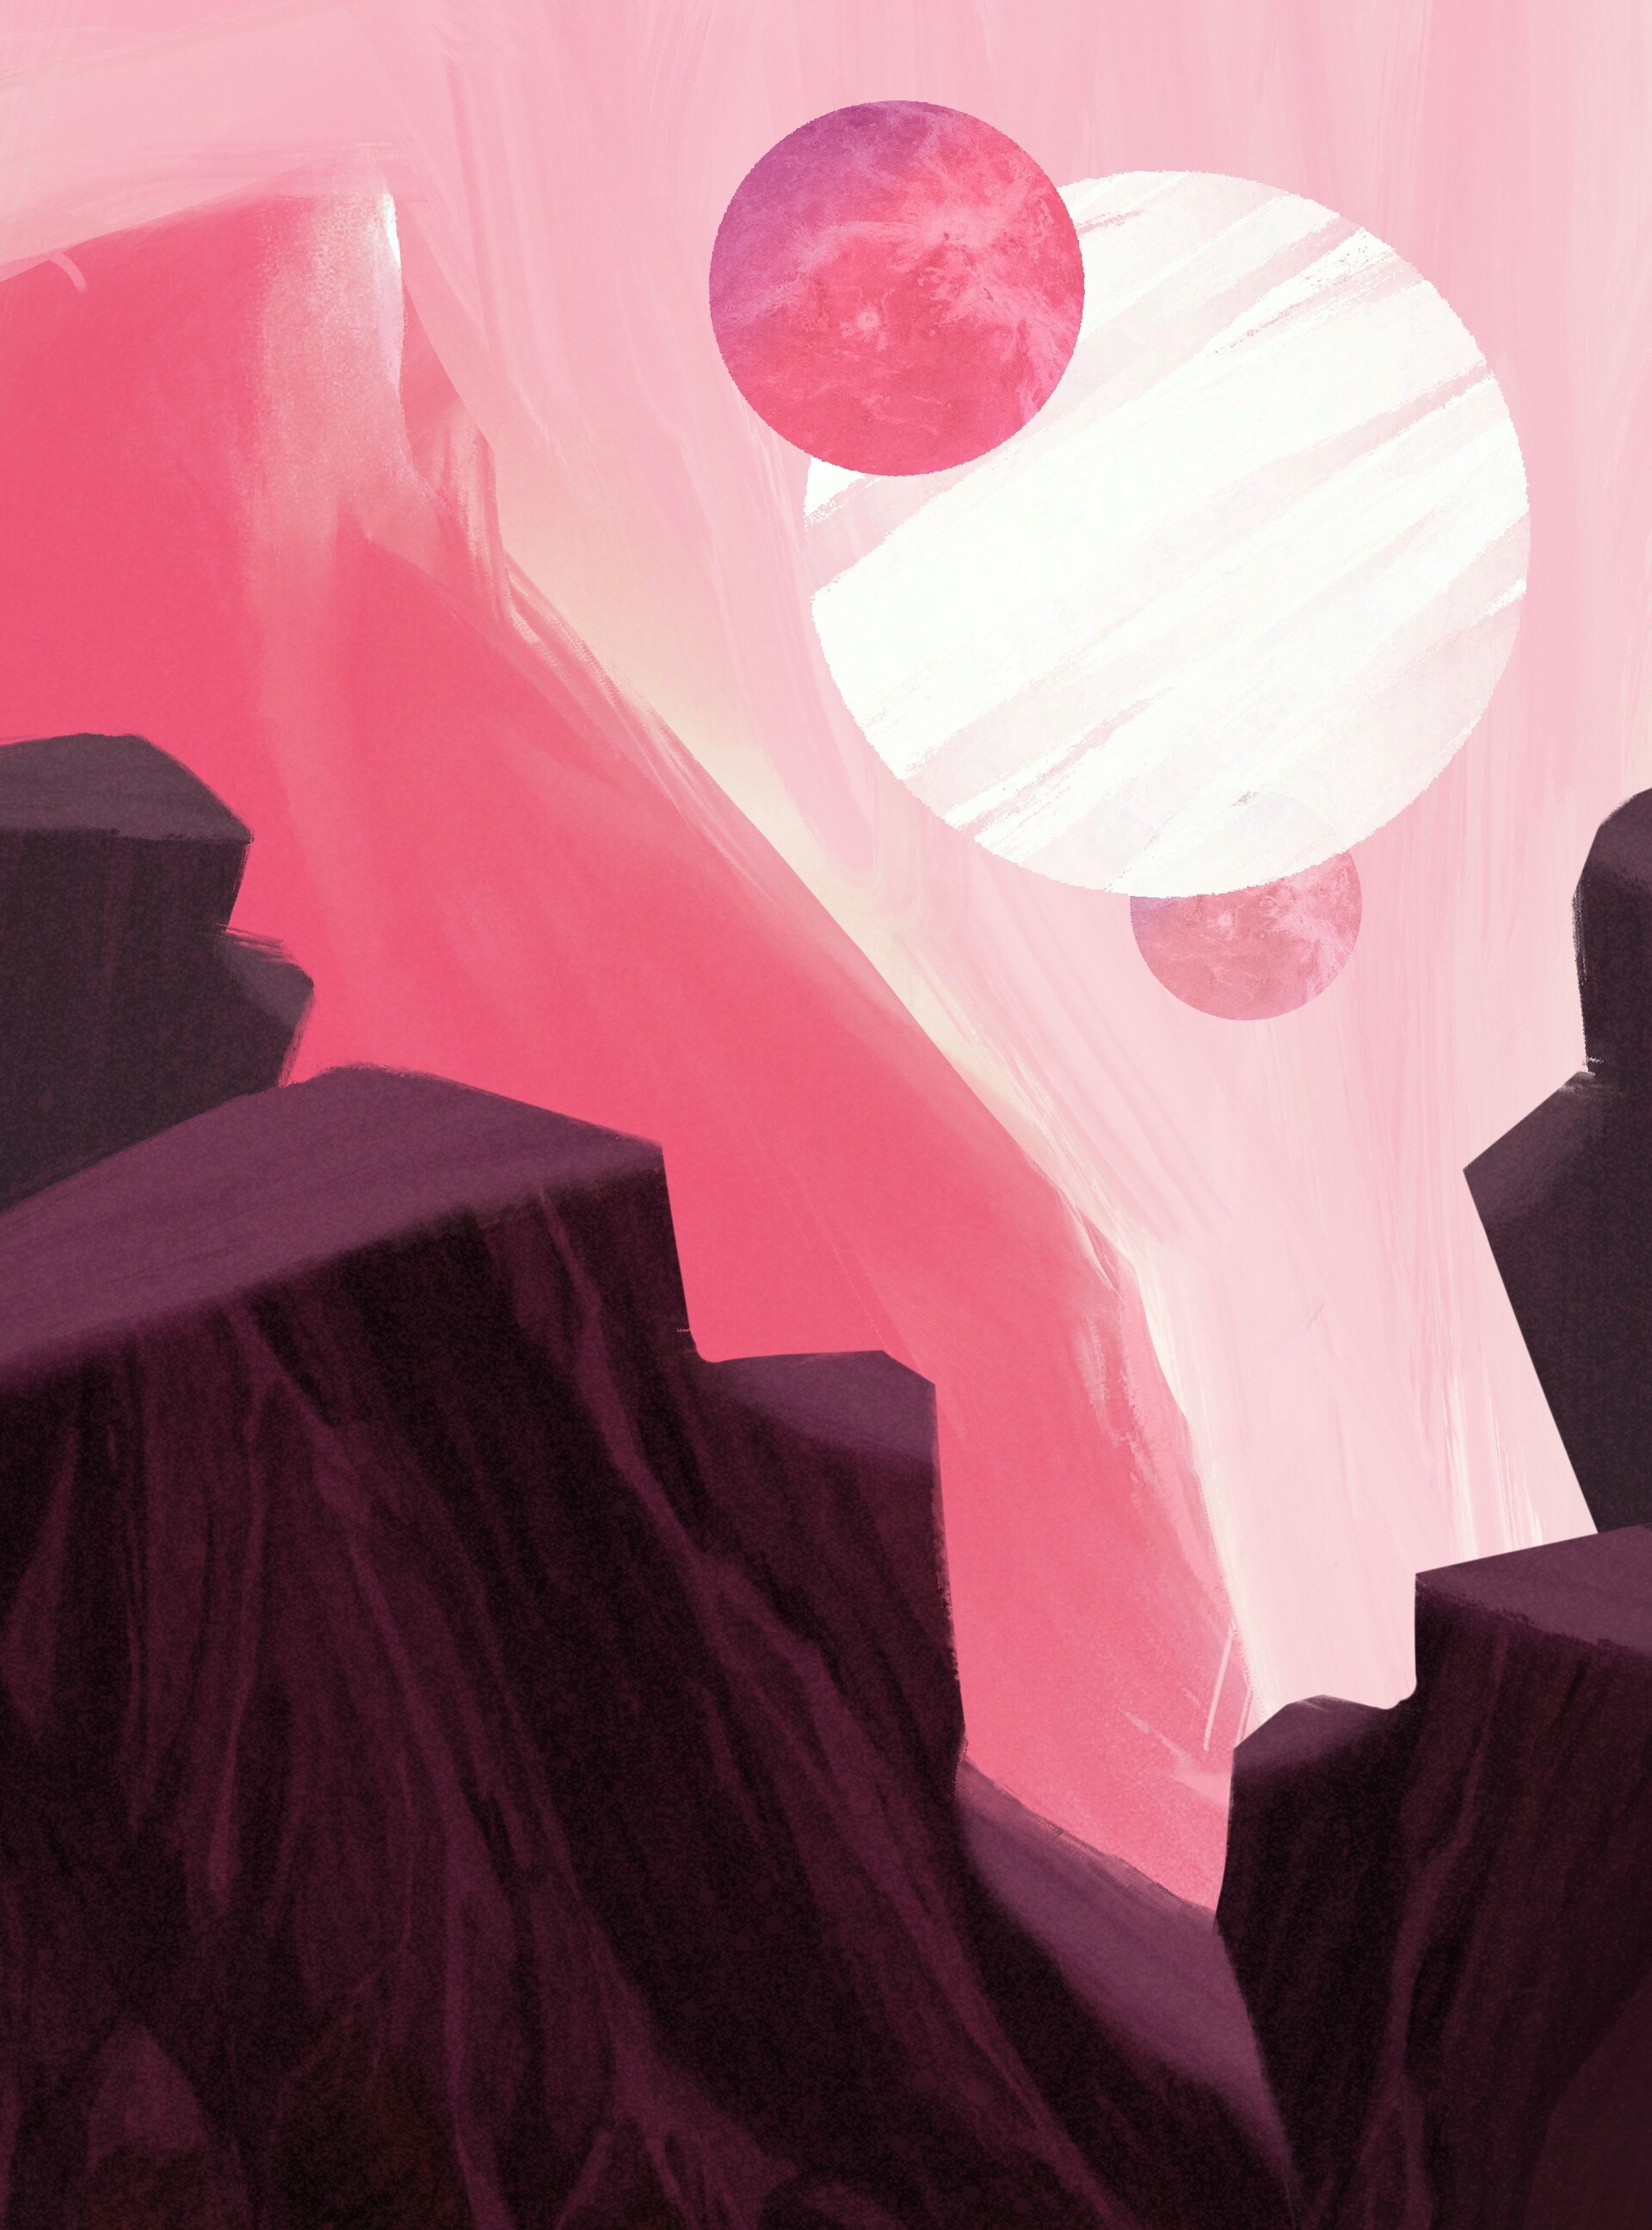 Fiction landscape, that's incredible, rocks, planets 8k Backgrounds